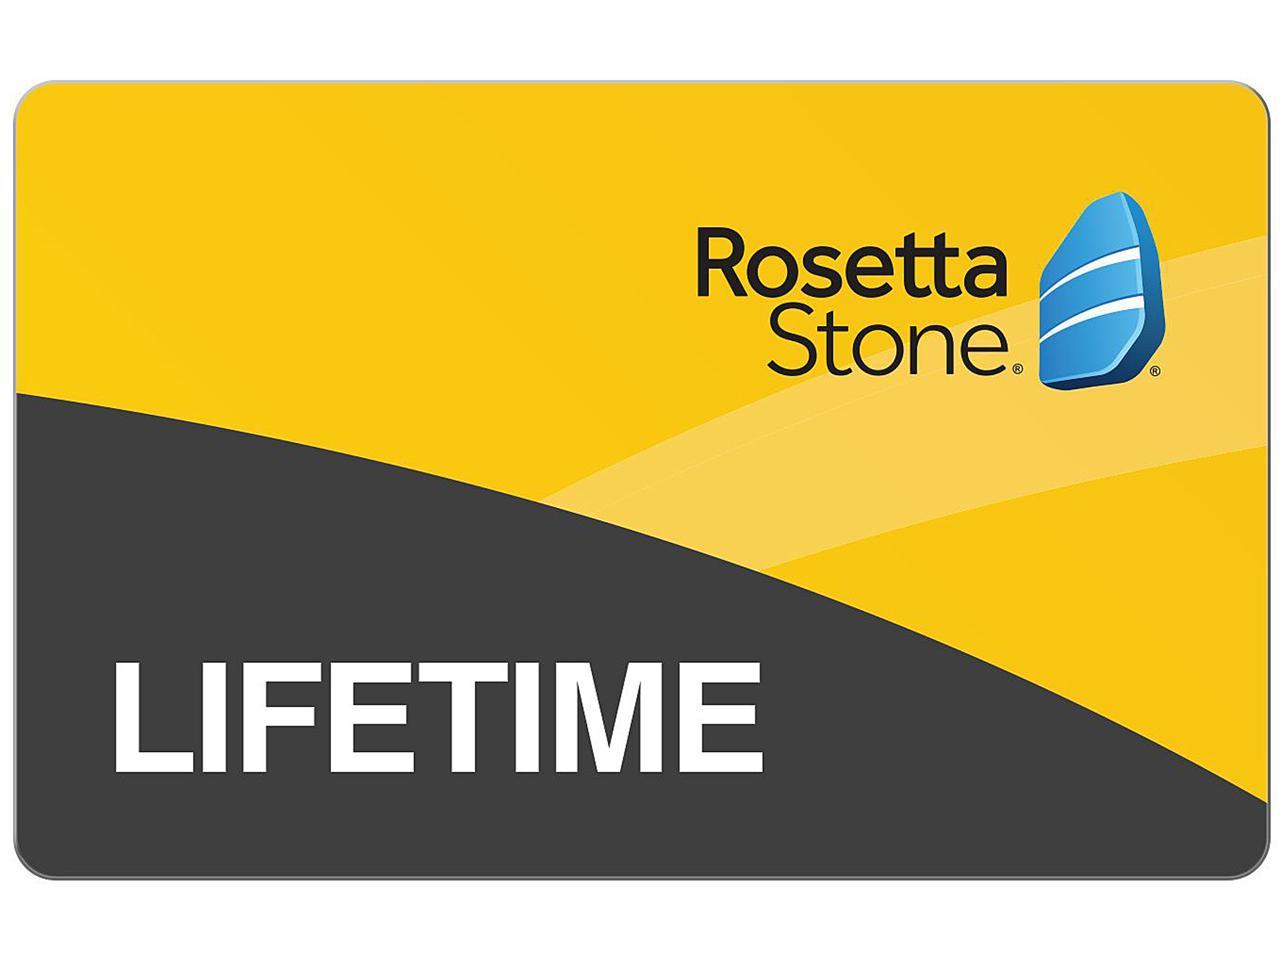 how to install rosetta stone on windows 2003 server